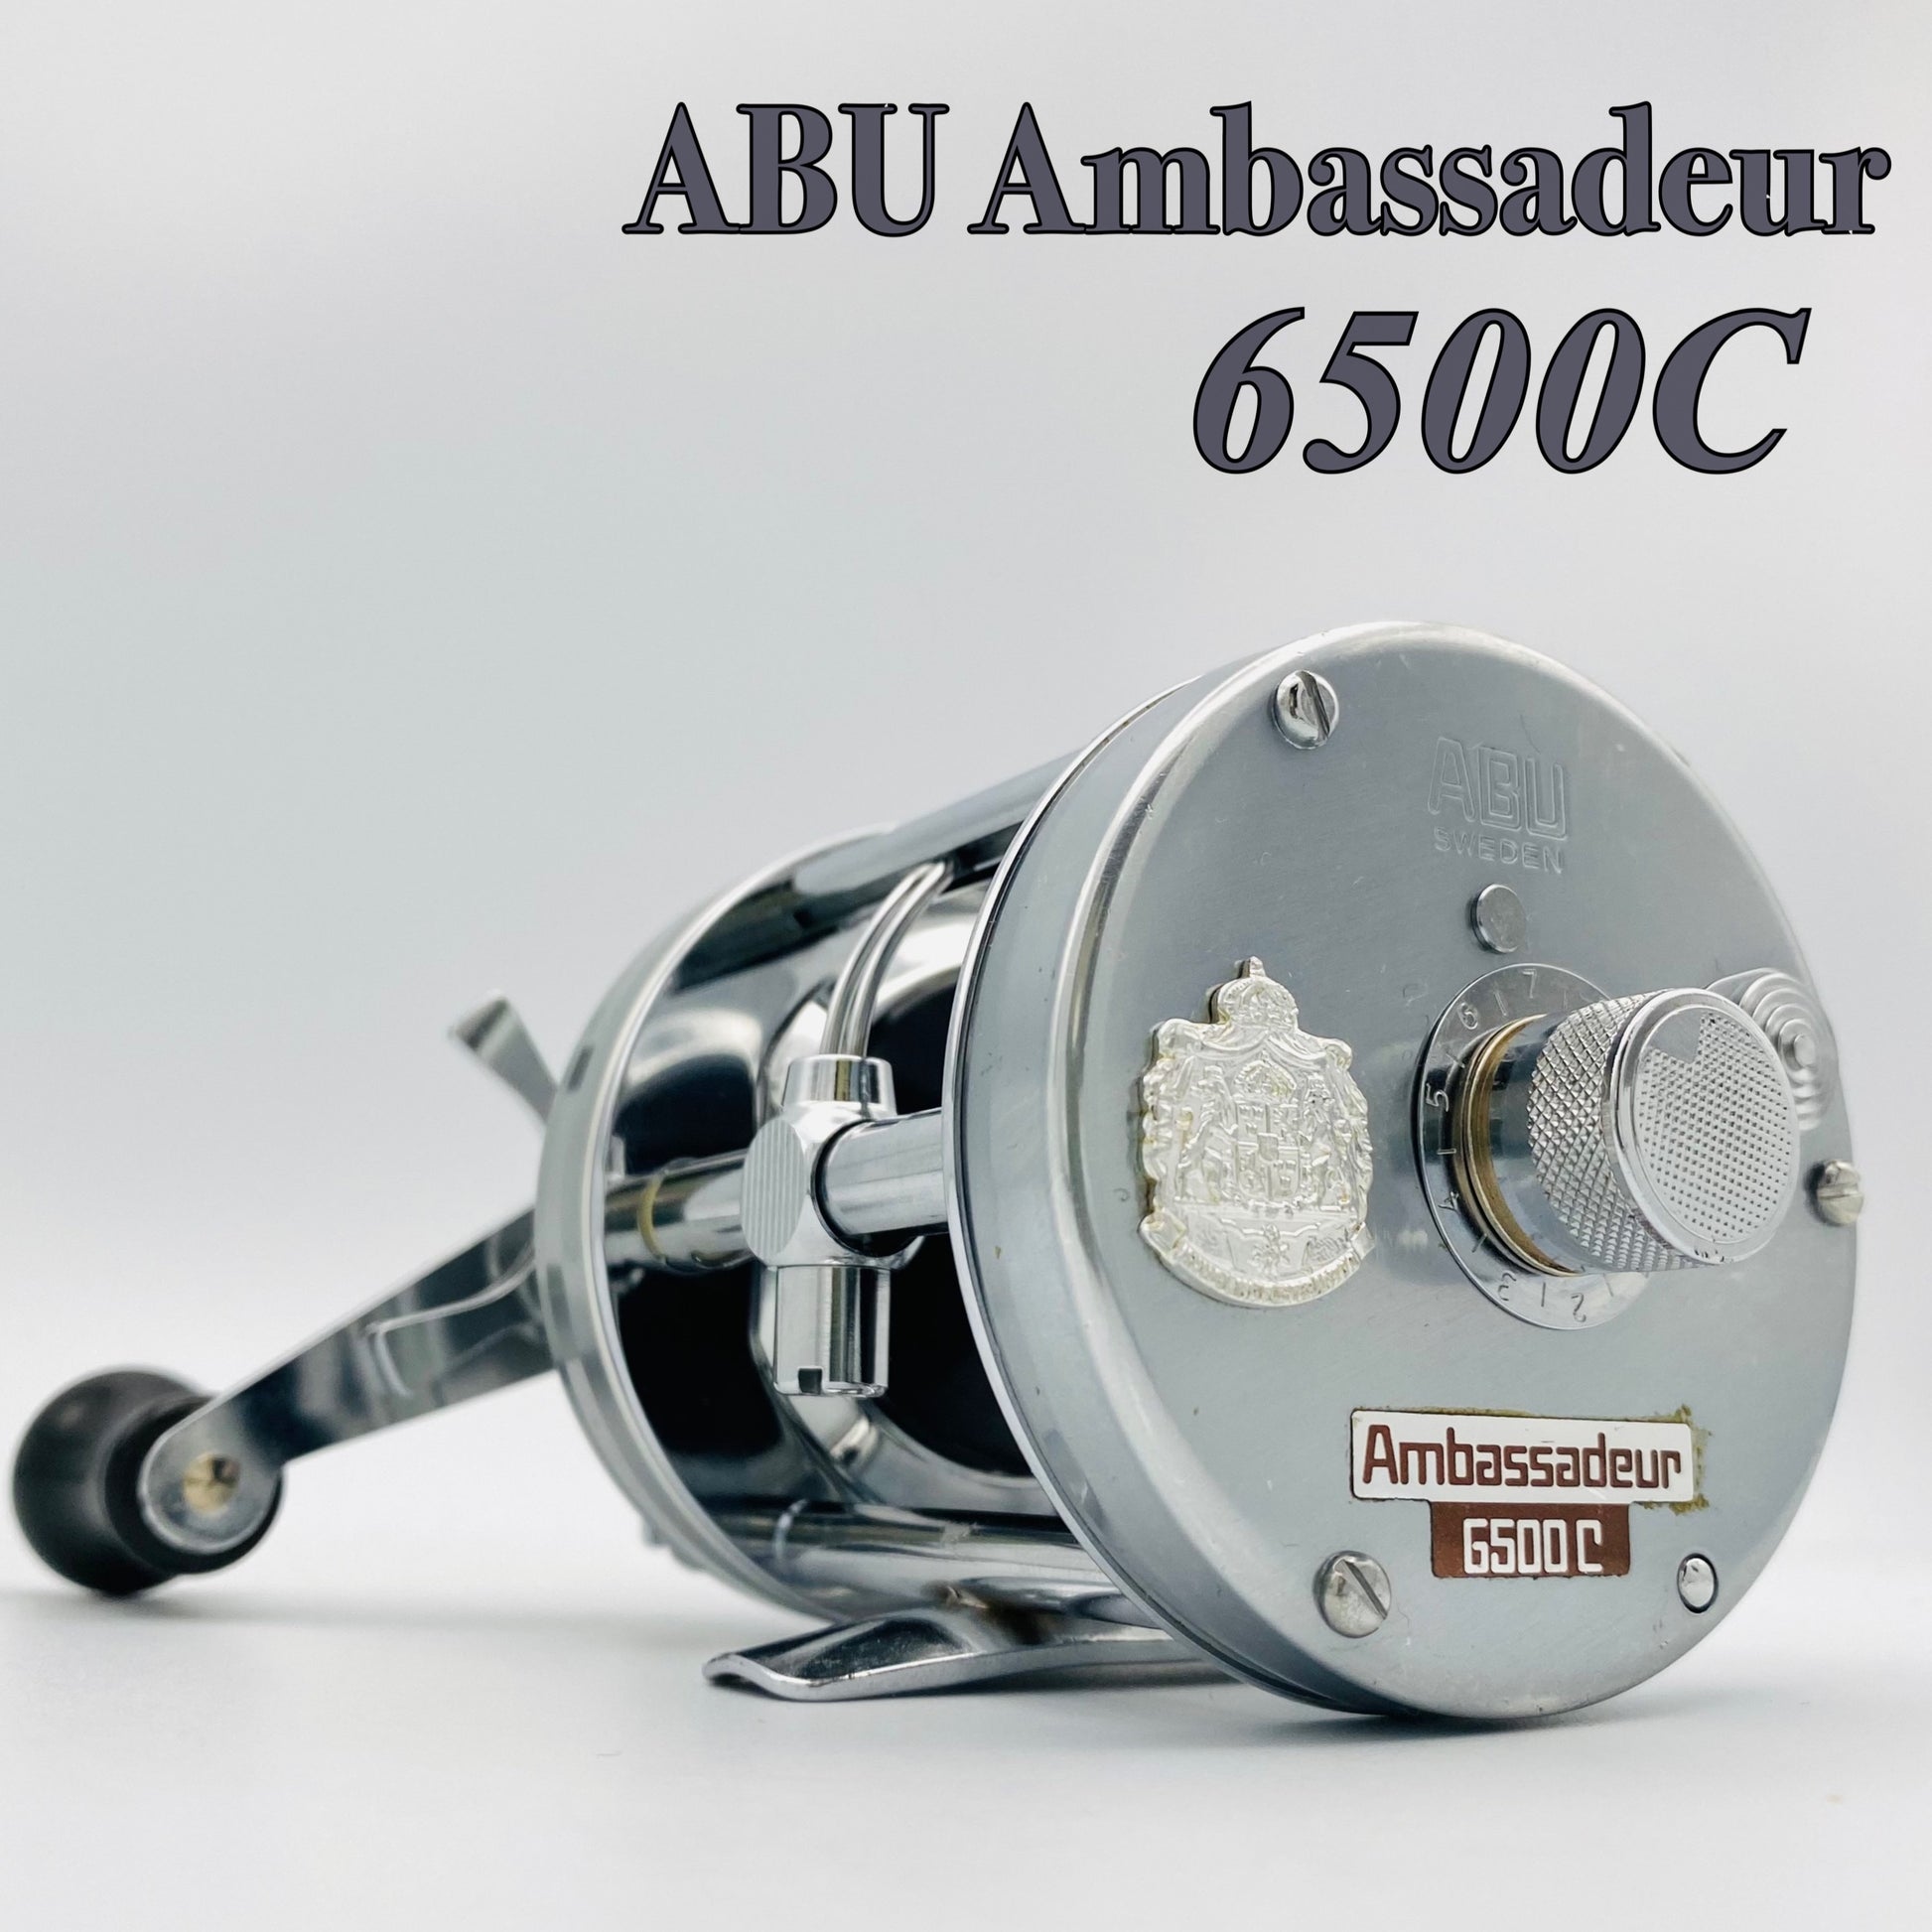 Abu Ambassadeur 6500C ステッカー 771104 – Try-Angle